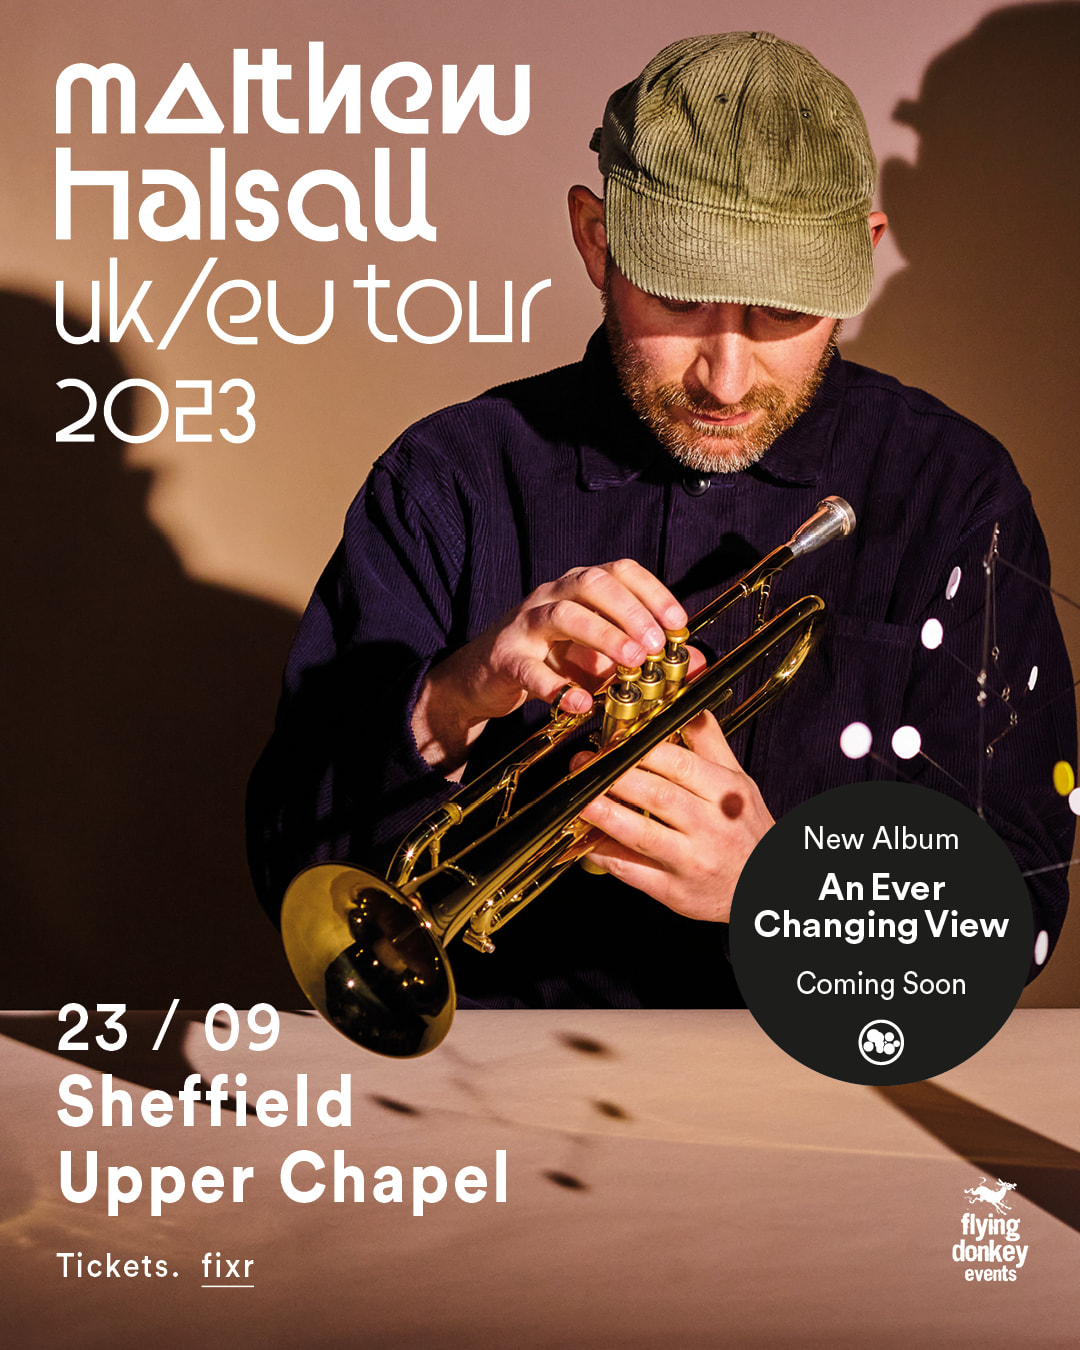 Flying Donkey Events present Matthew Halsall at Upper Chapel, Sheffield